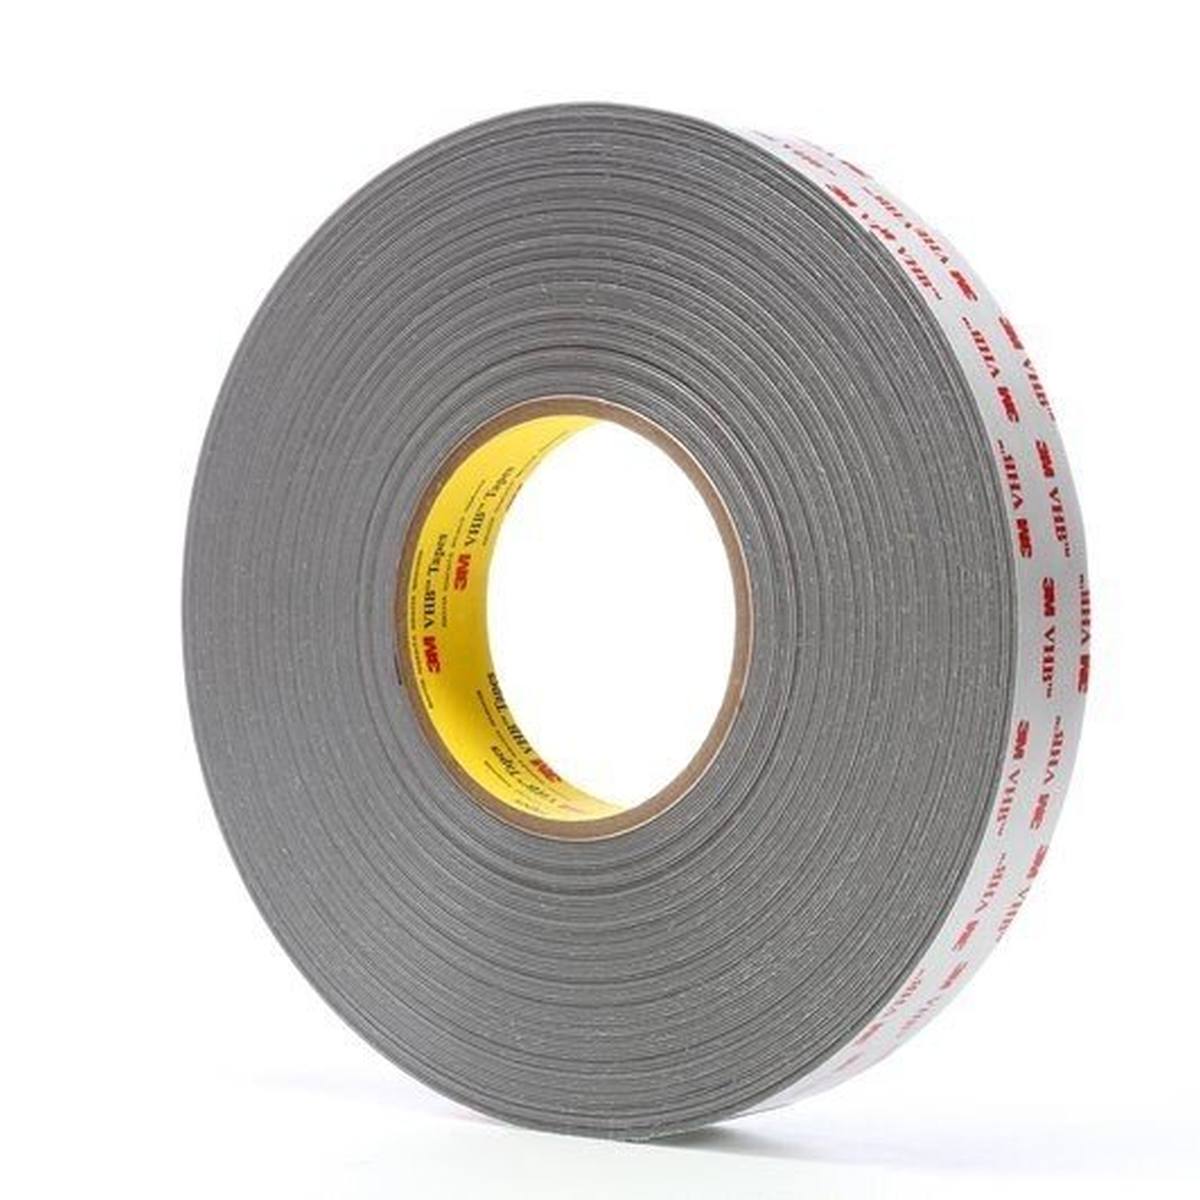 3M VHB adhesive tape RP 16P, gray, 12 mm x 66 m, 0.4 mm